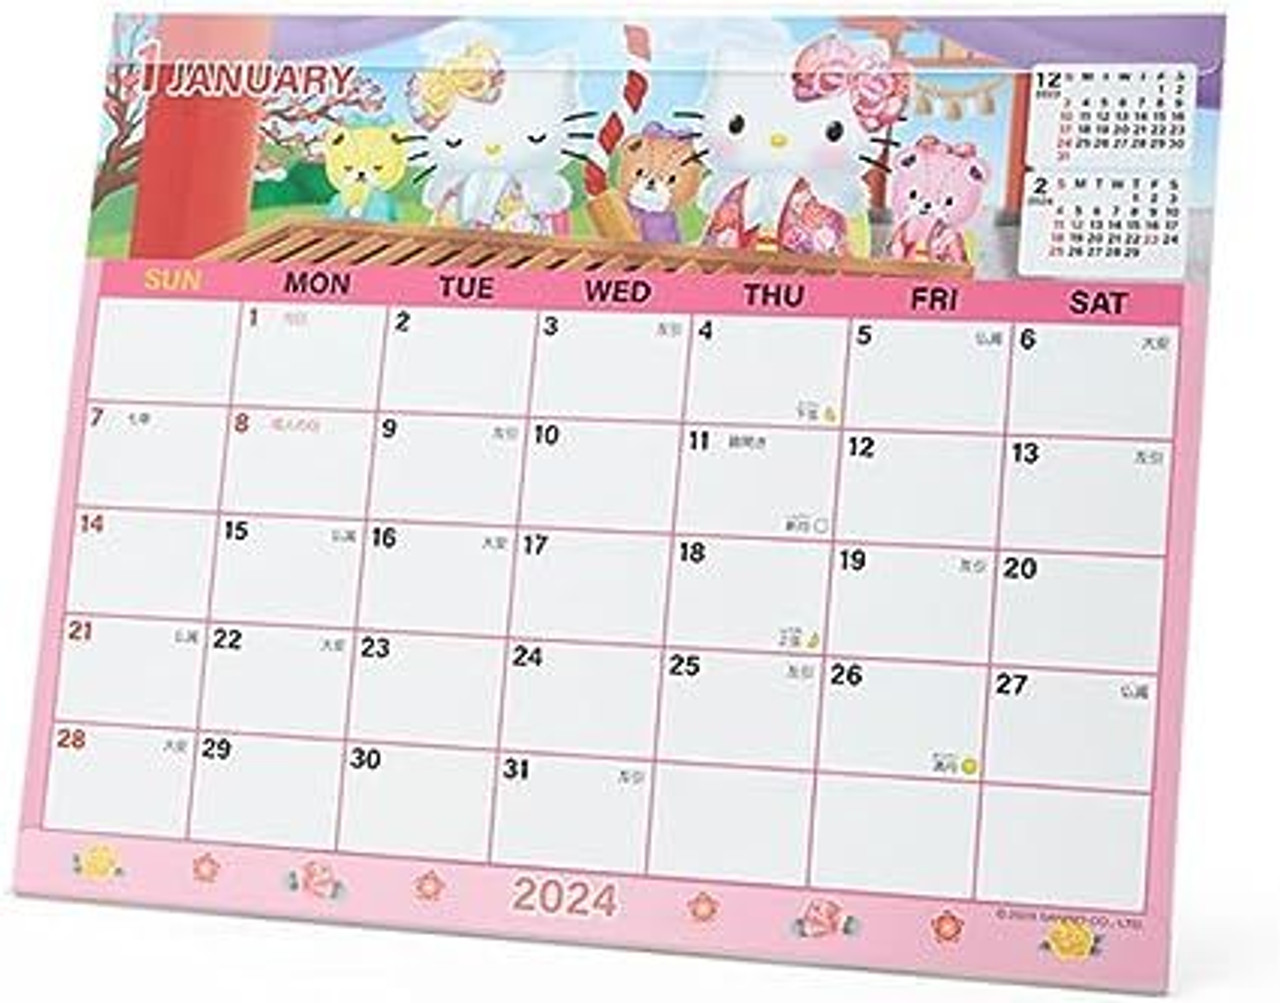 Hello Kitty Calendar 2024 Template